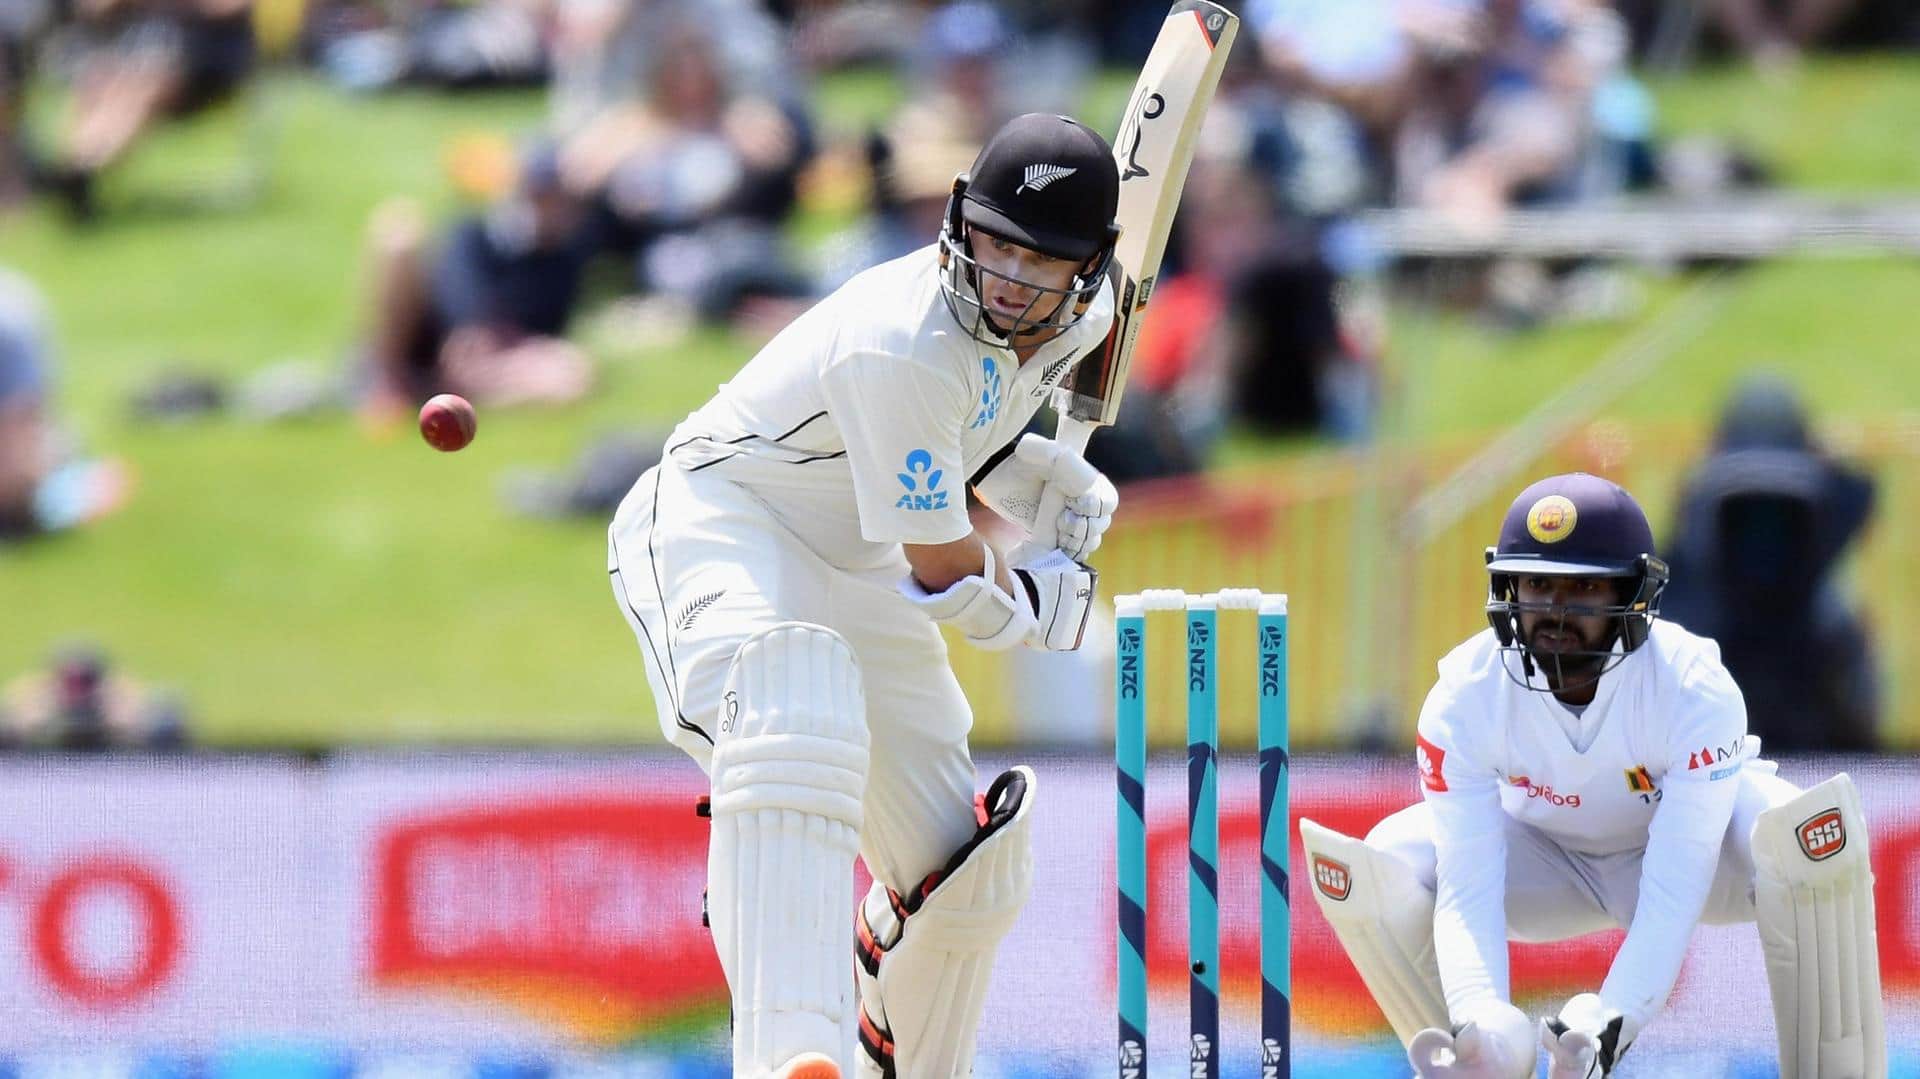 NZ vs SL: Tom Latham slams his 27th Test half-century